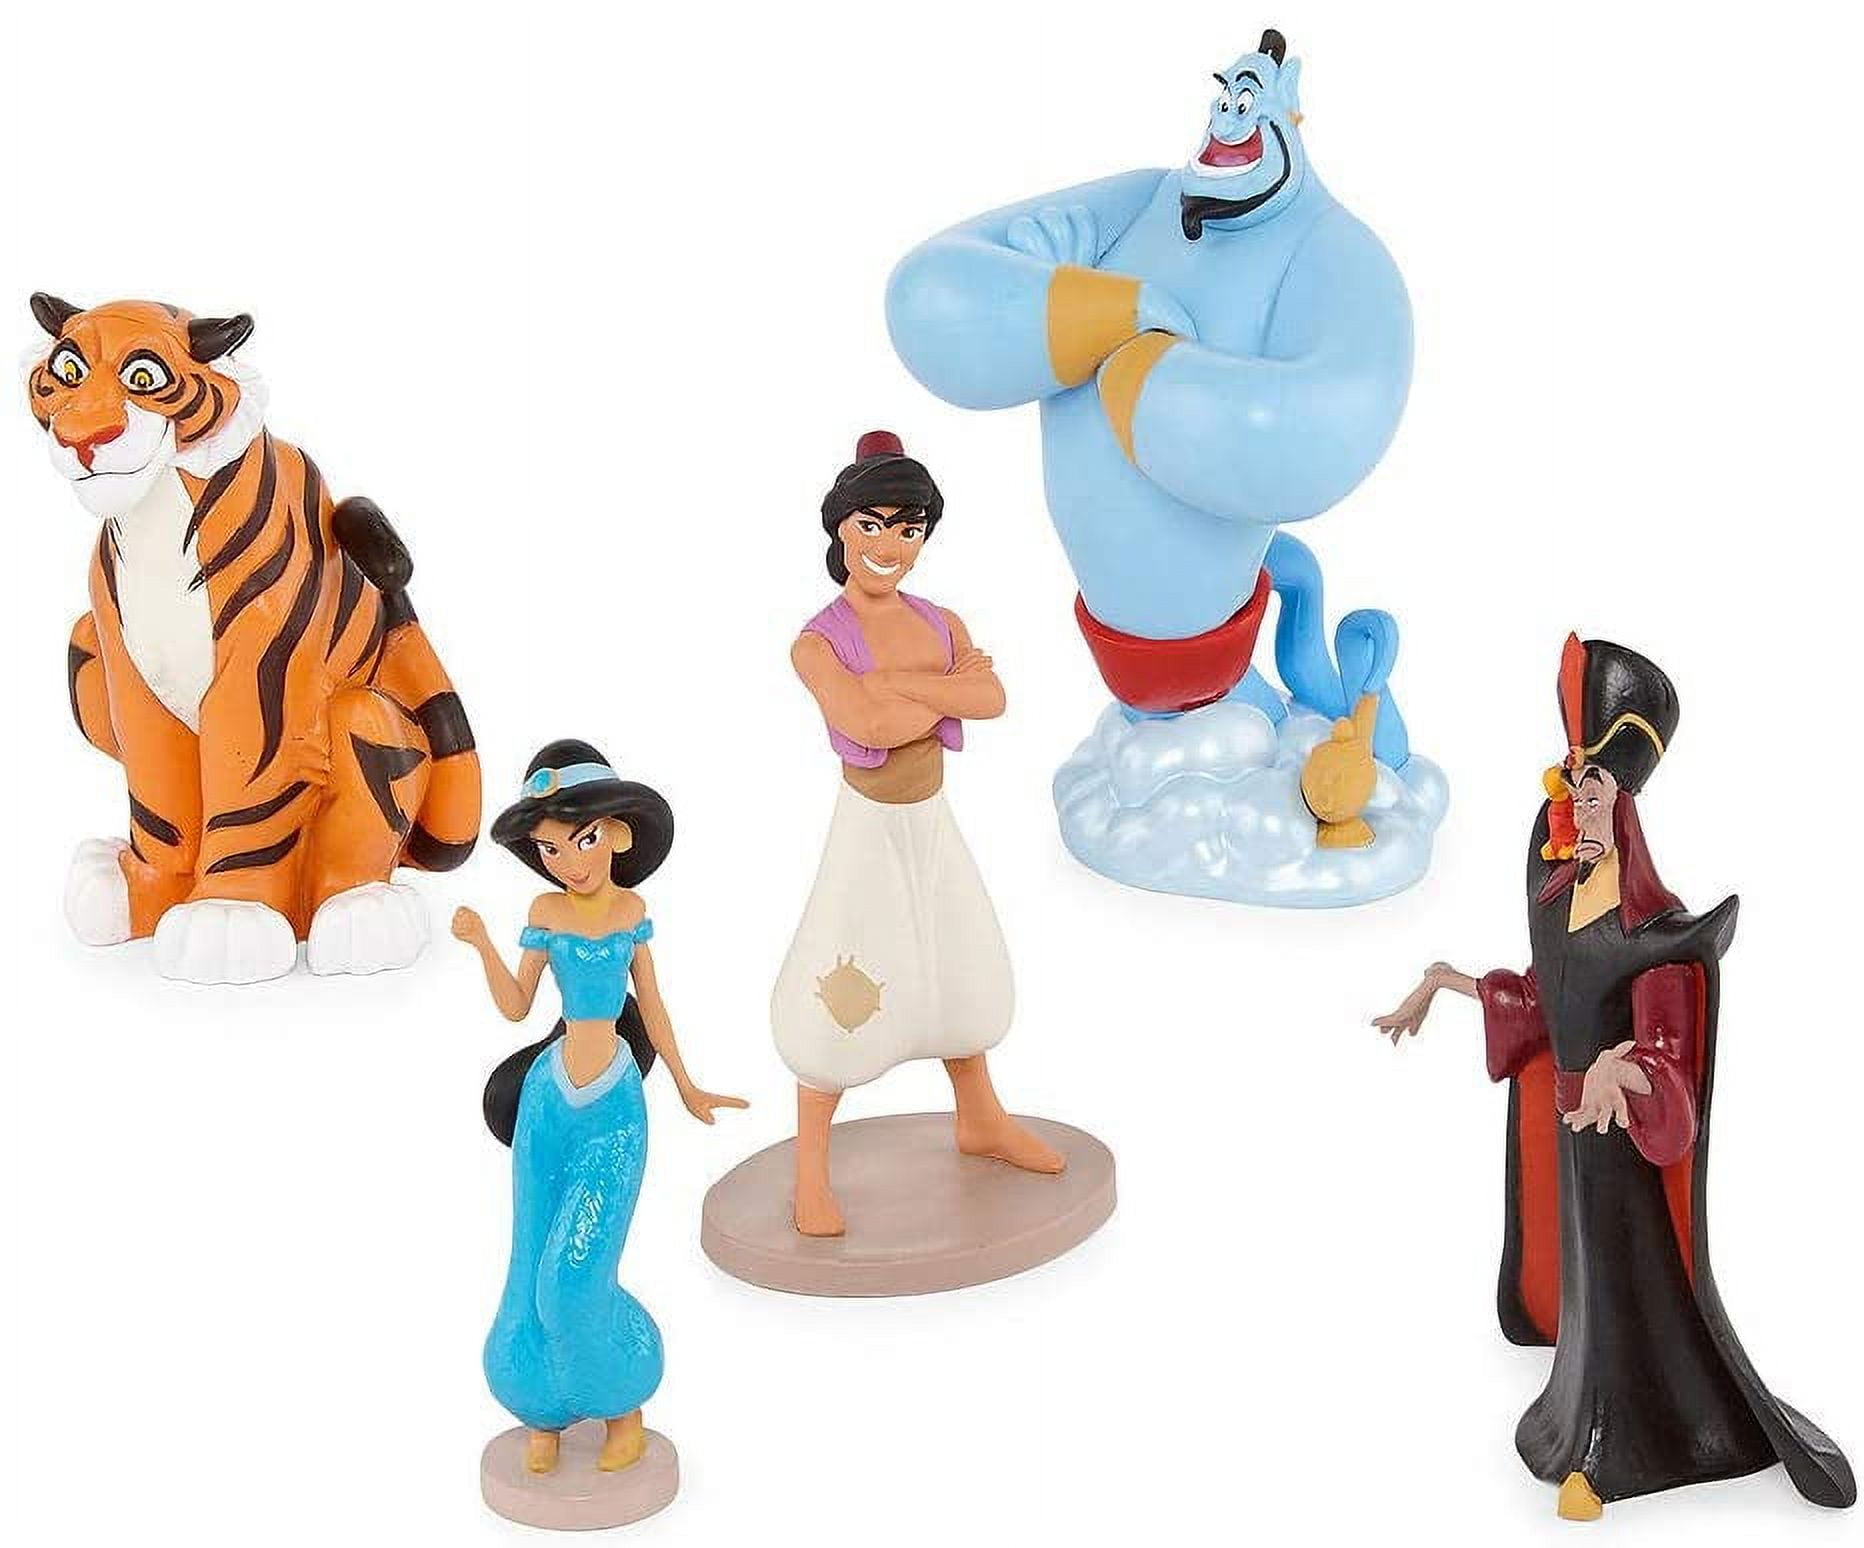 Set/10 Disney Aladdin Miniature Figurines / Disney Aladdin Mini Figurine Set  FRANCE / Walt Disney Animation Aladdin Collectibles / DISNEY 